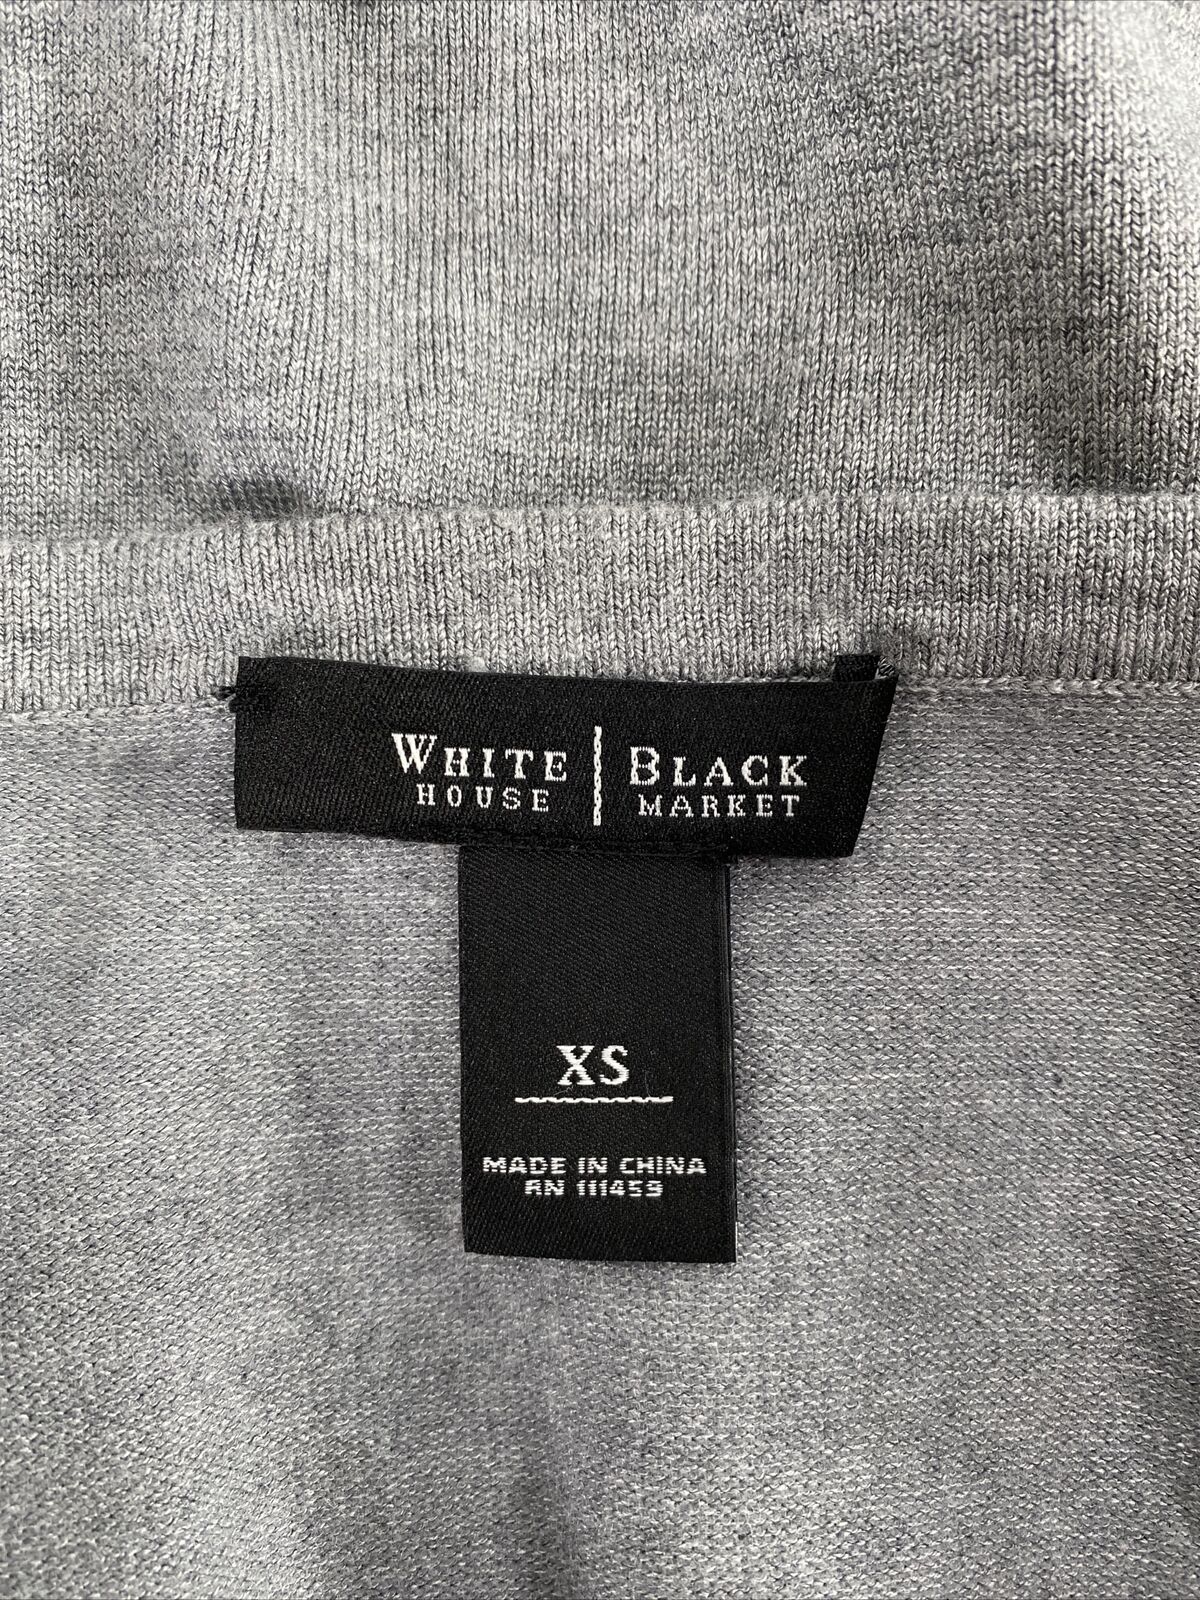 White House Black Market Women's Gray 3/4 Sleeve Cardigan Sweater - XS